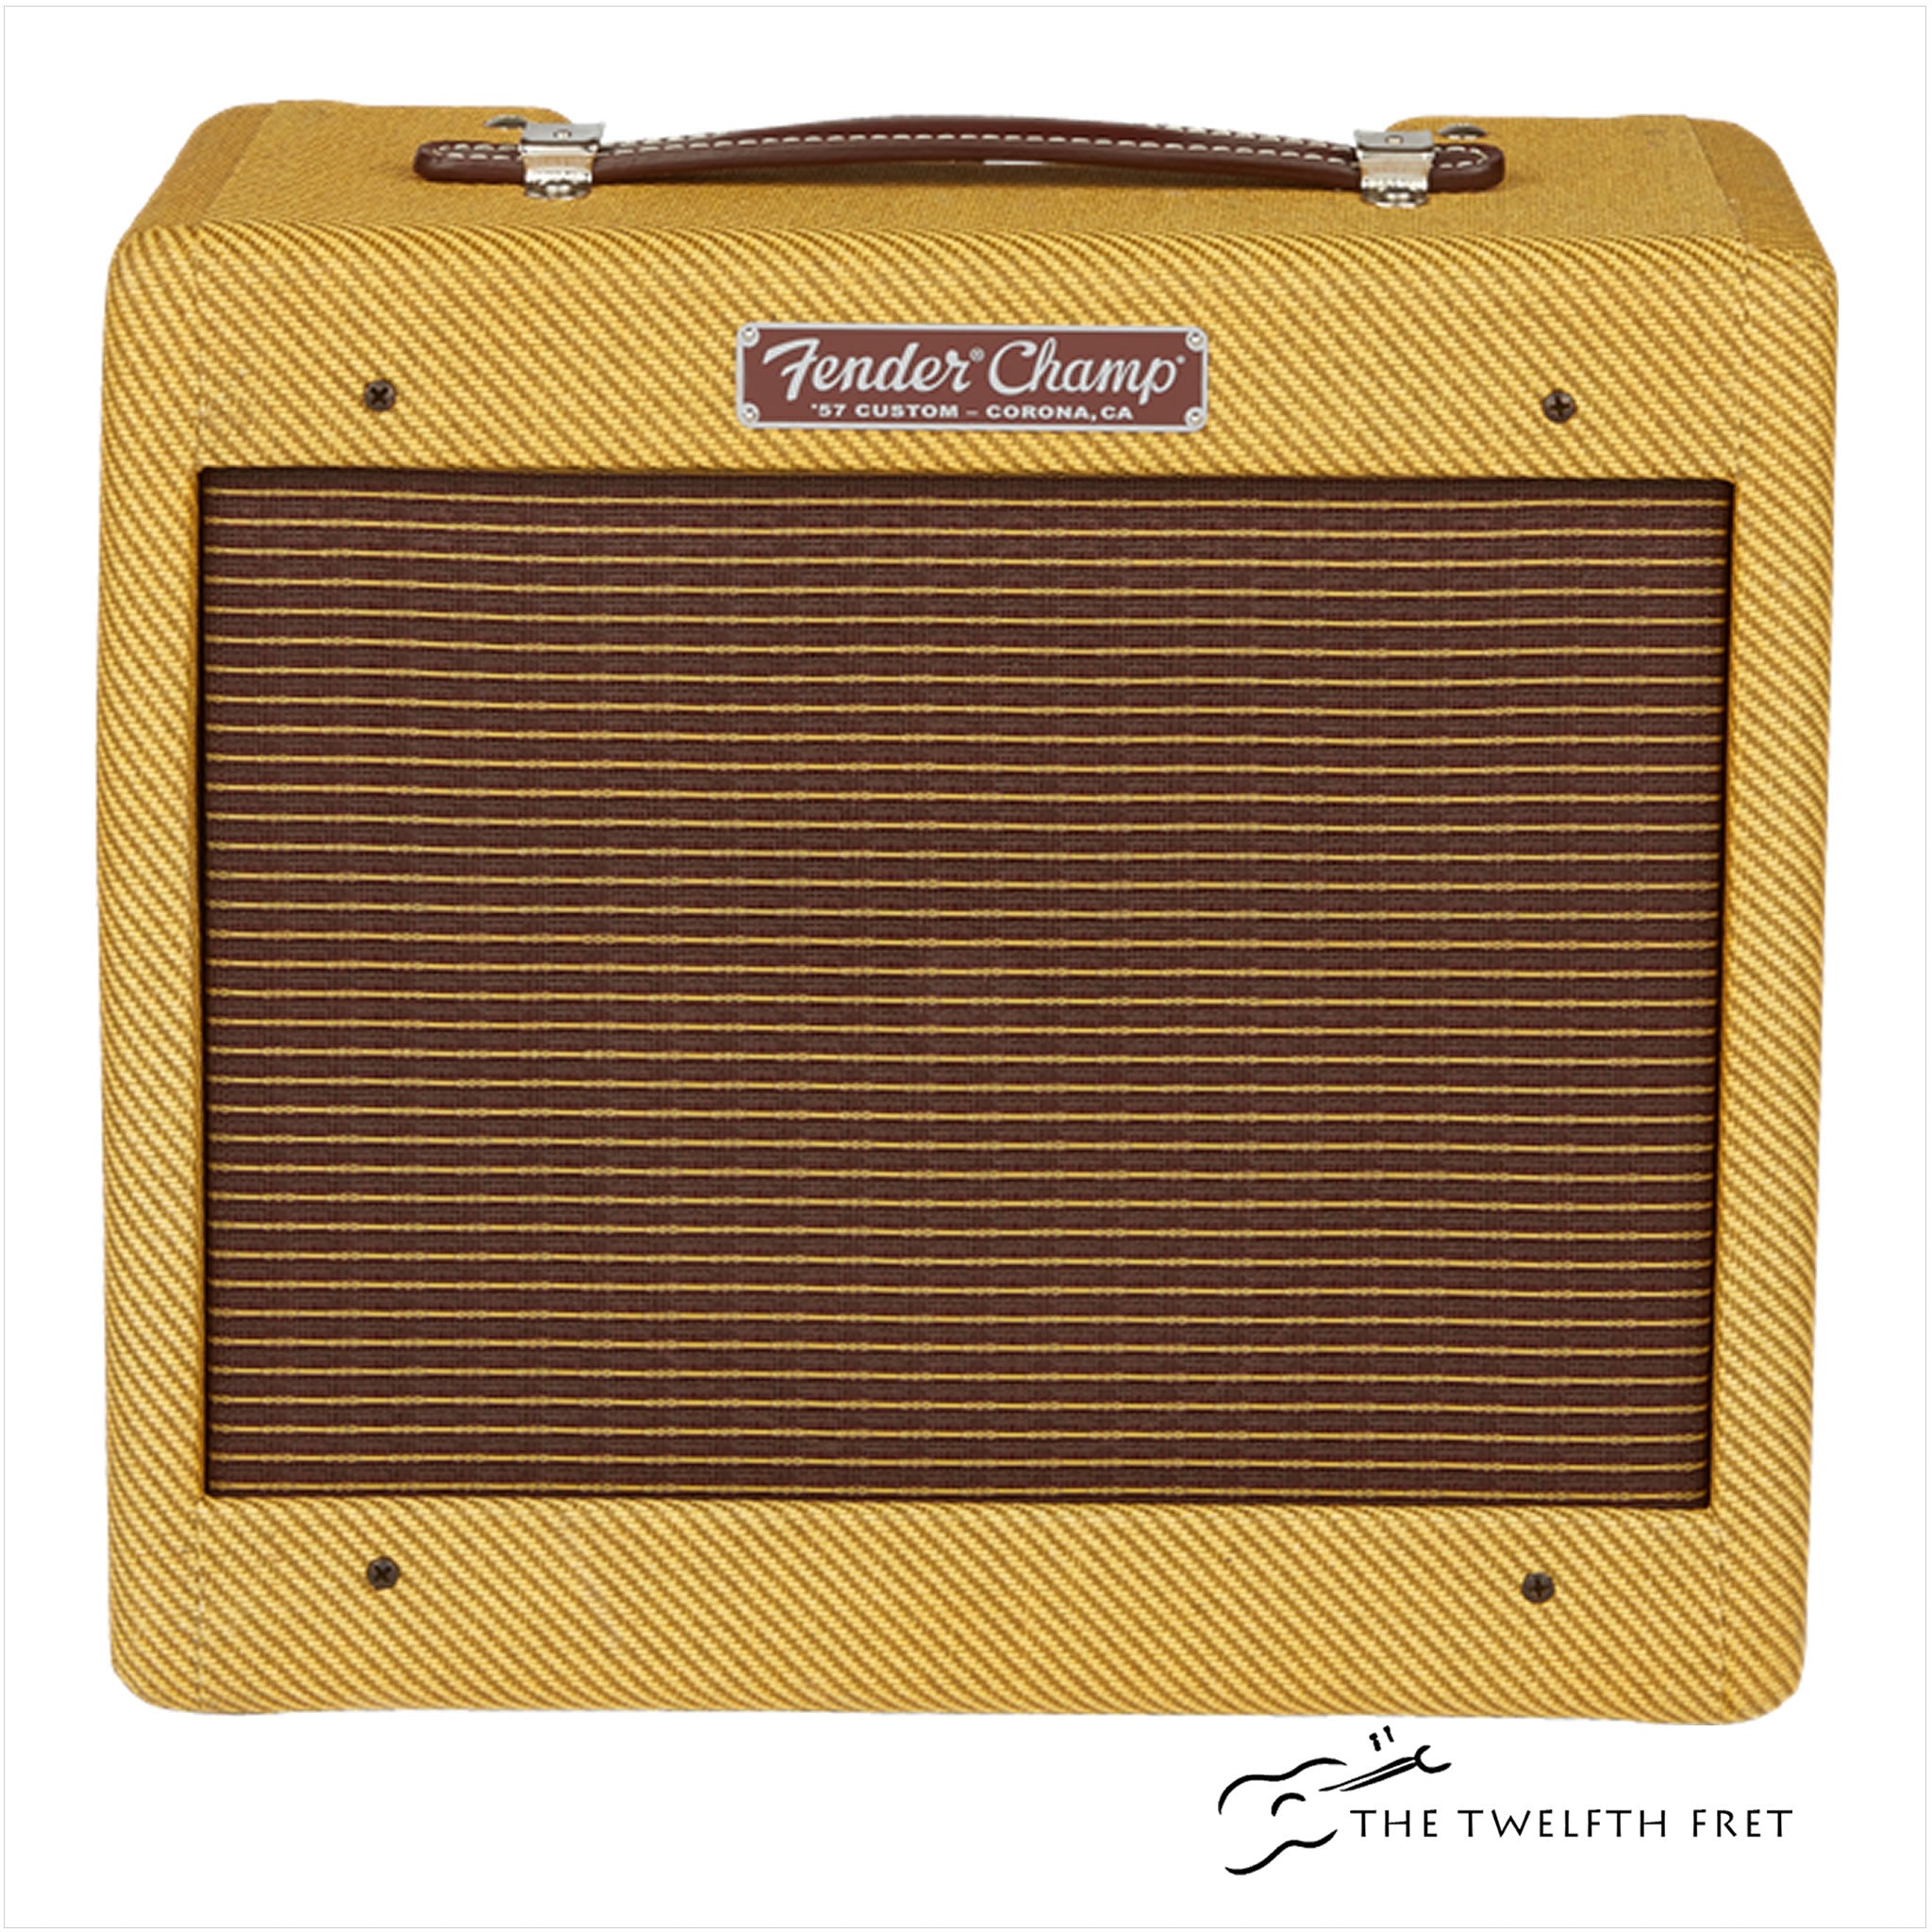 Fender '57 Custom Champ Amplifier - The Twelfth Fret